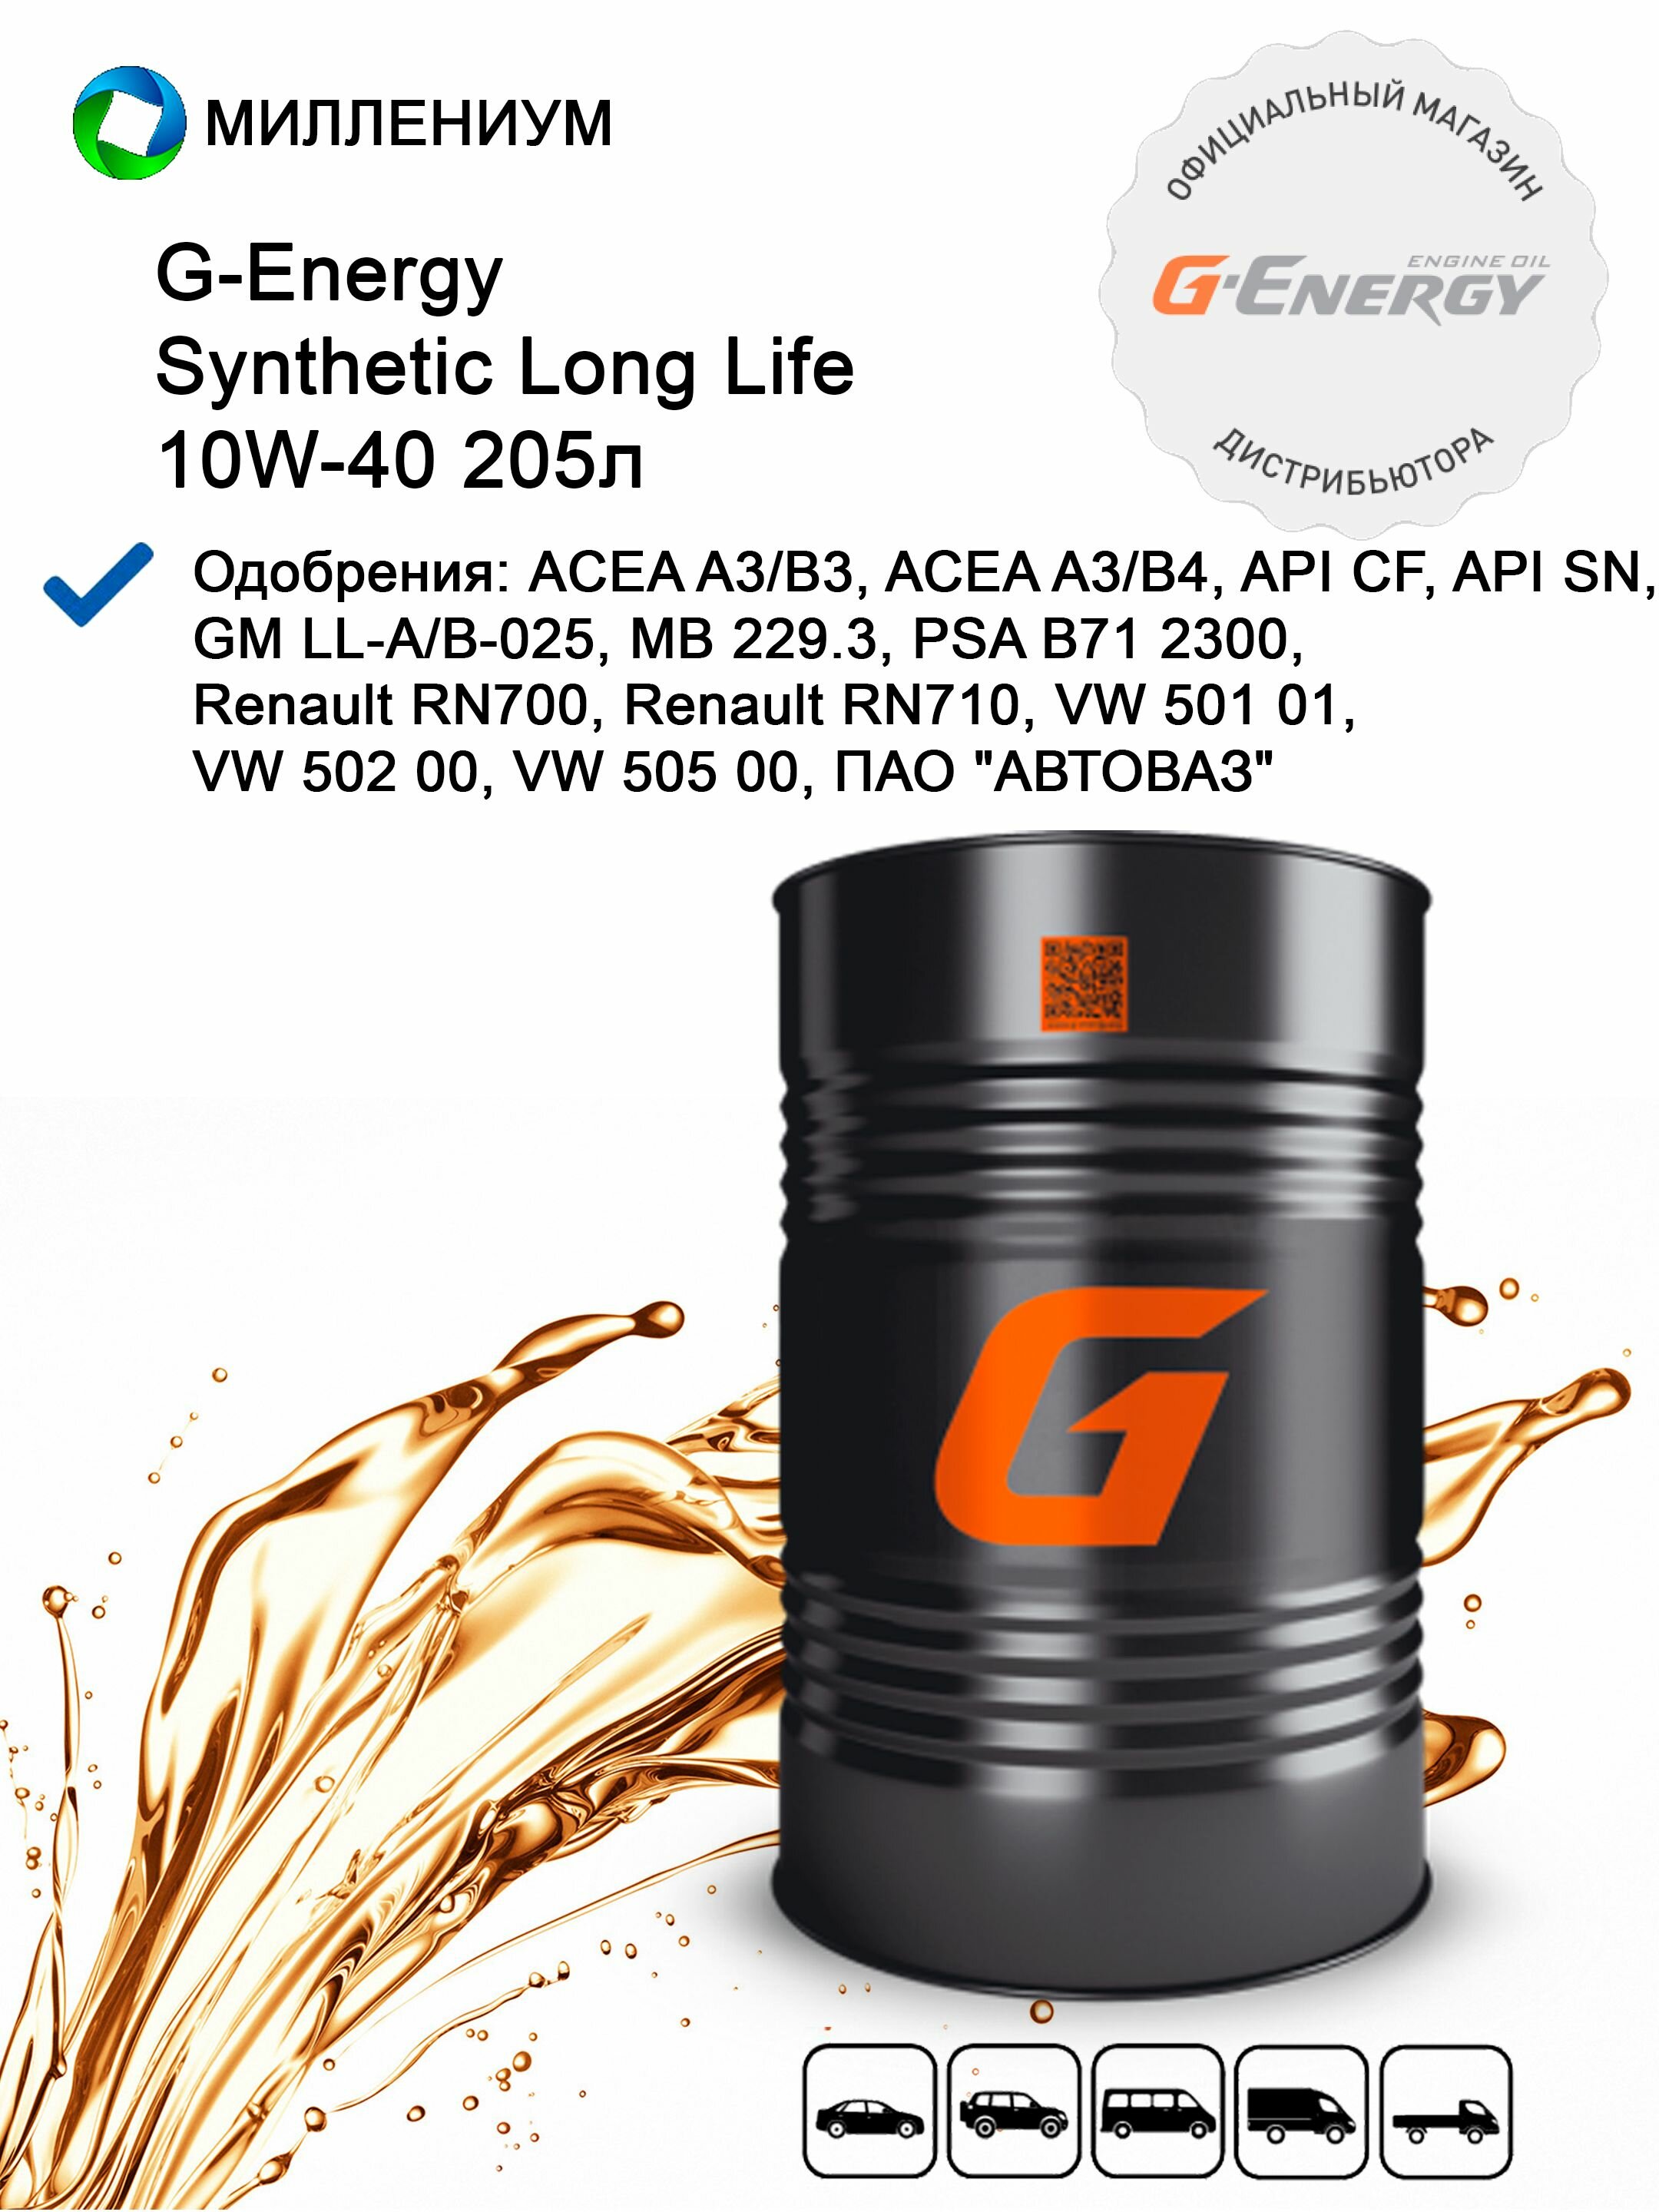   G-Energy Synthetic Long Life 10W-40 205 c